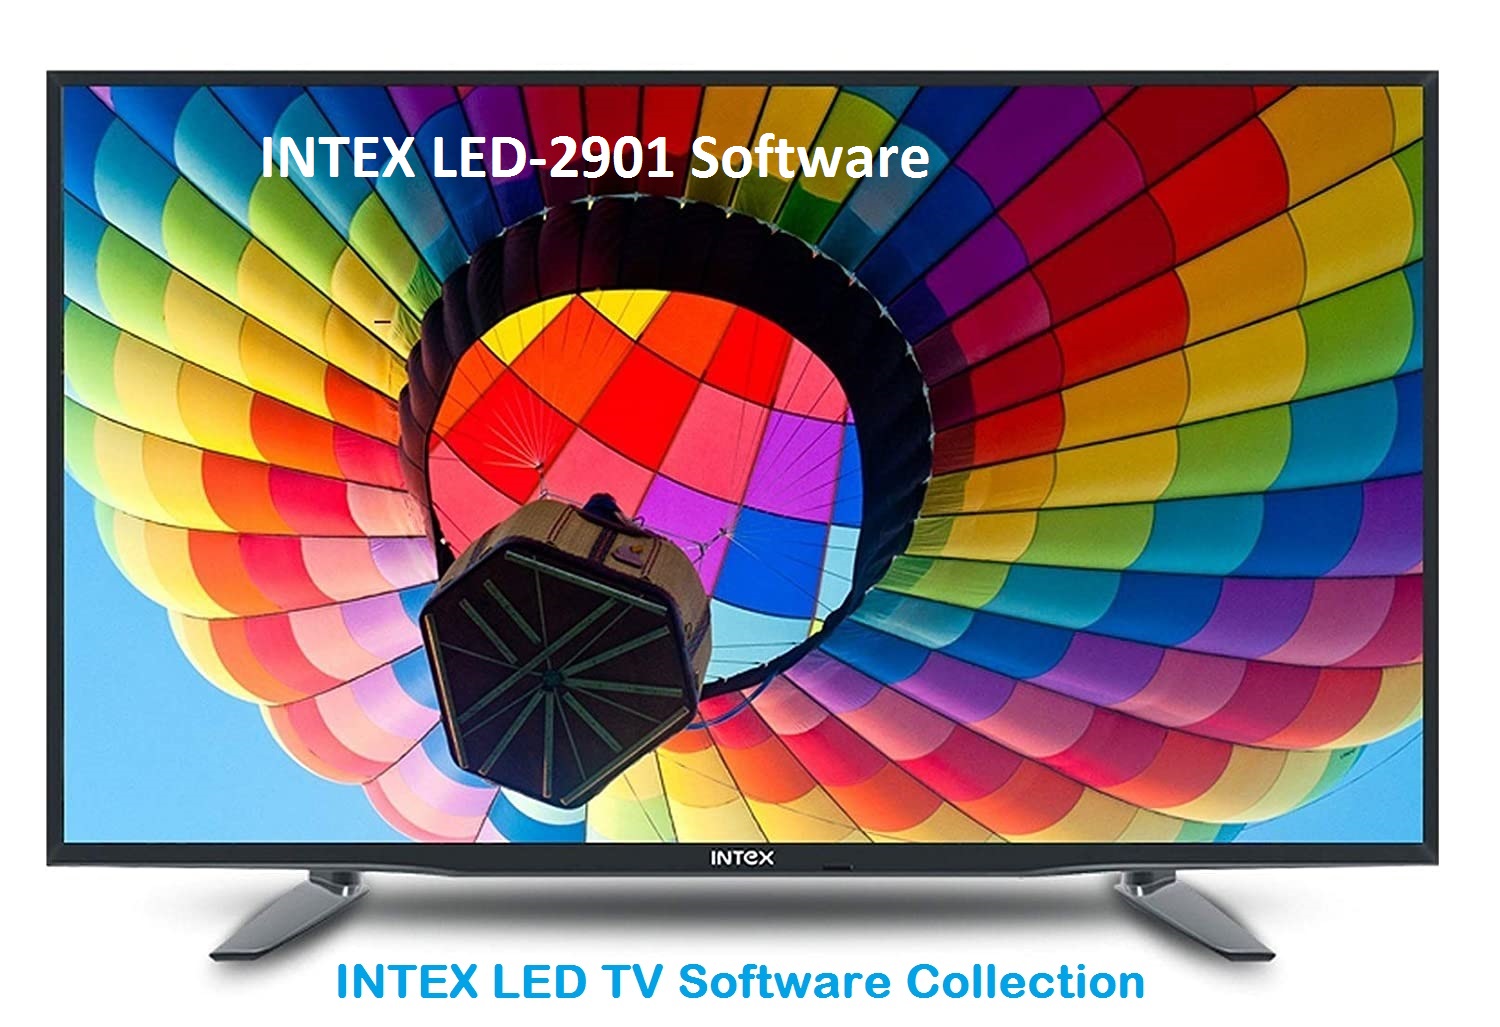 Intex Led-2901